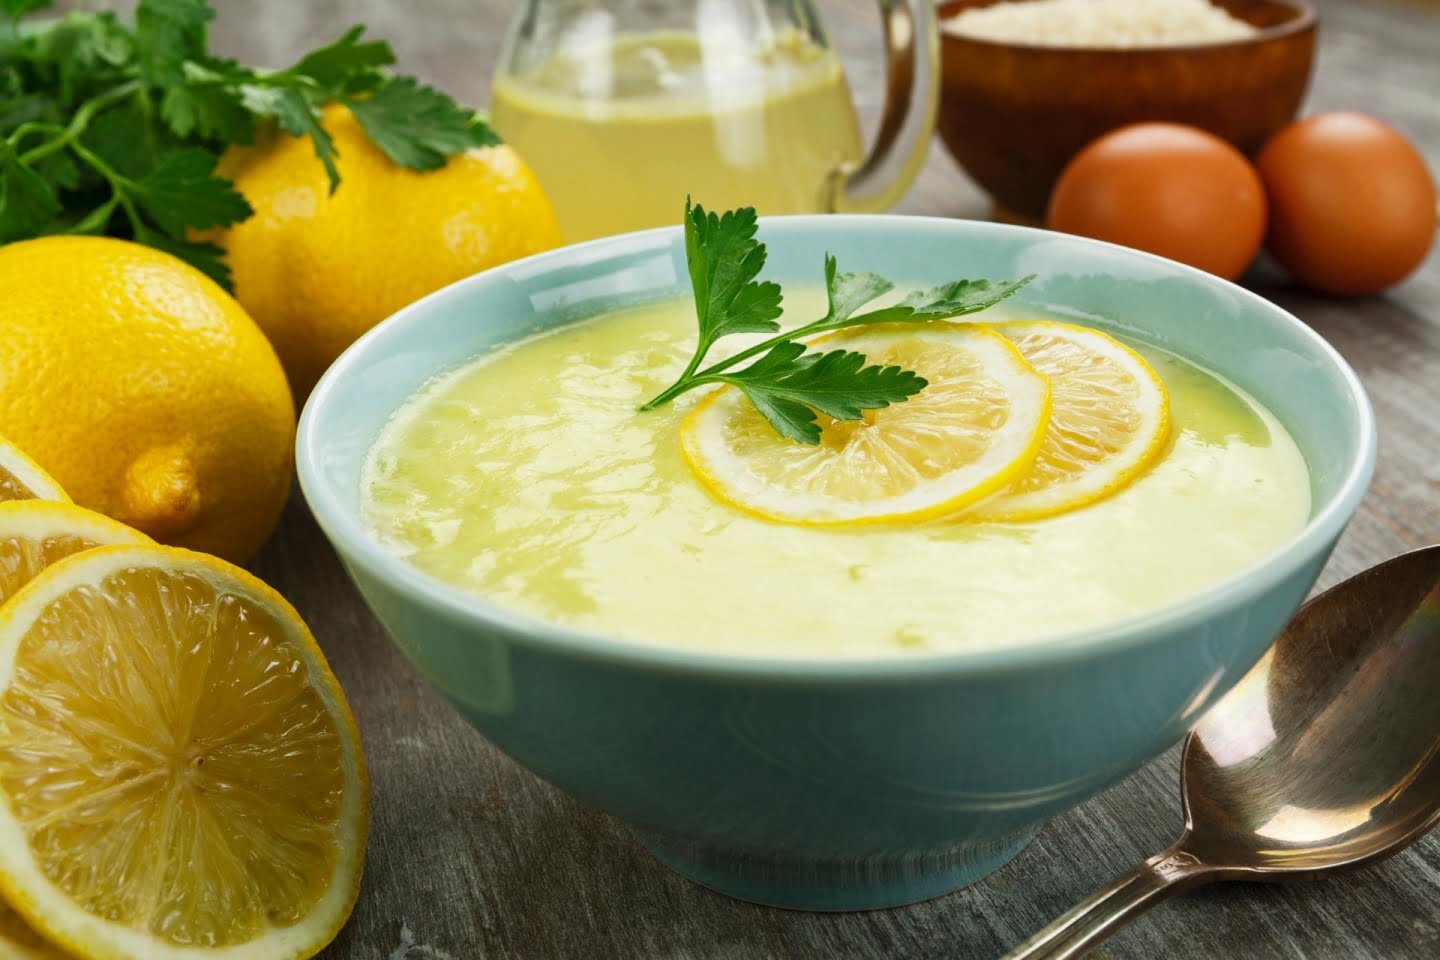 Limelemon wedges soup toppings